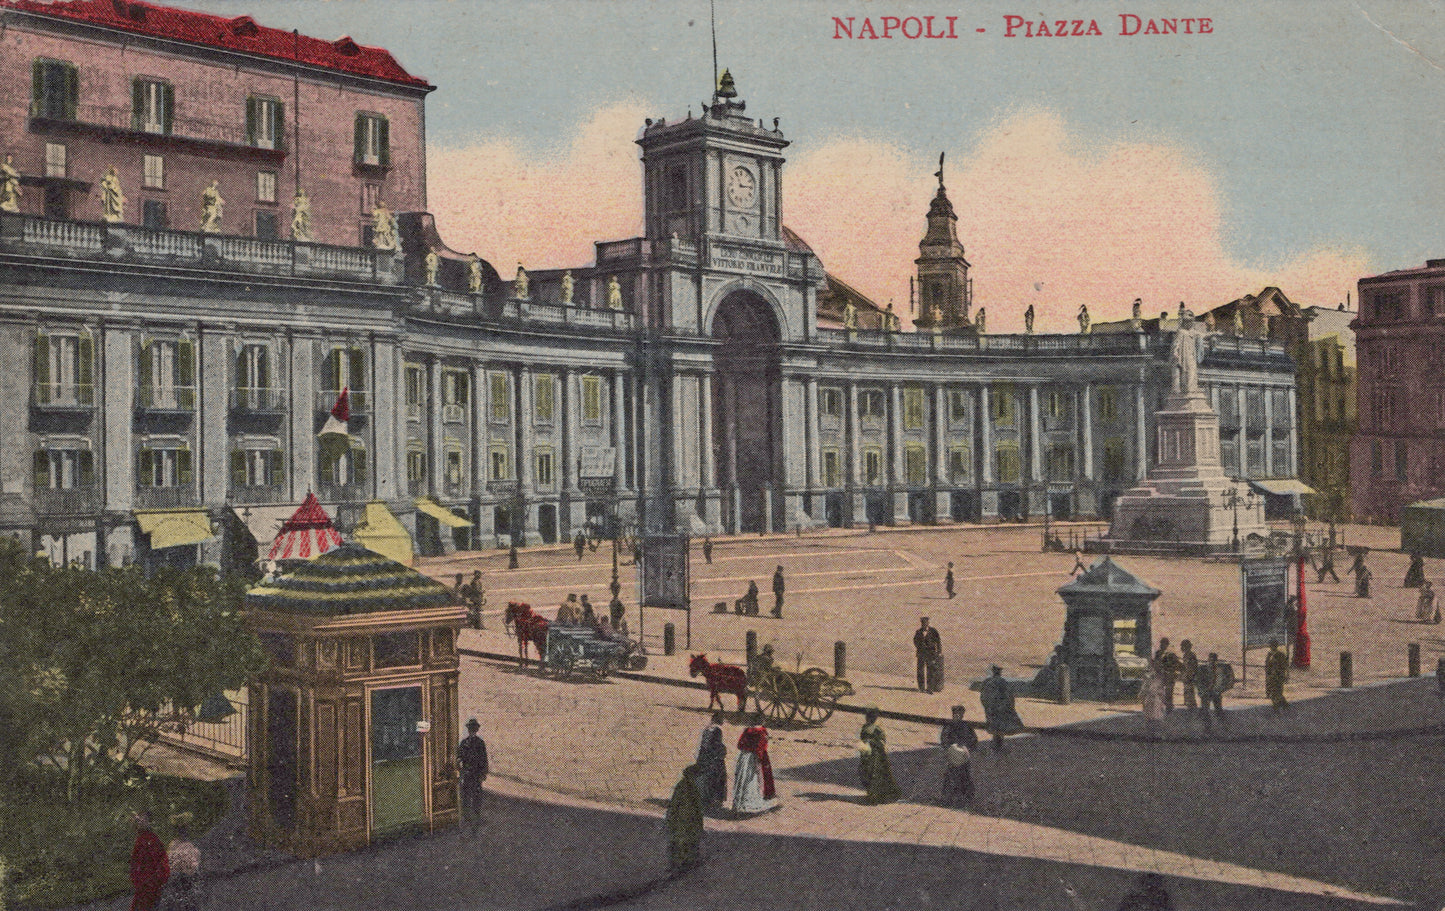 Piazza Dante, Naples